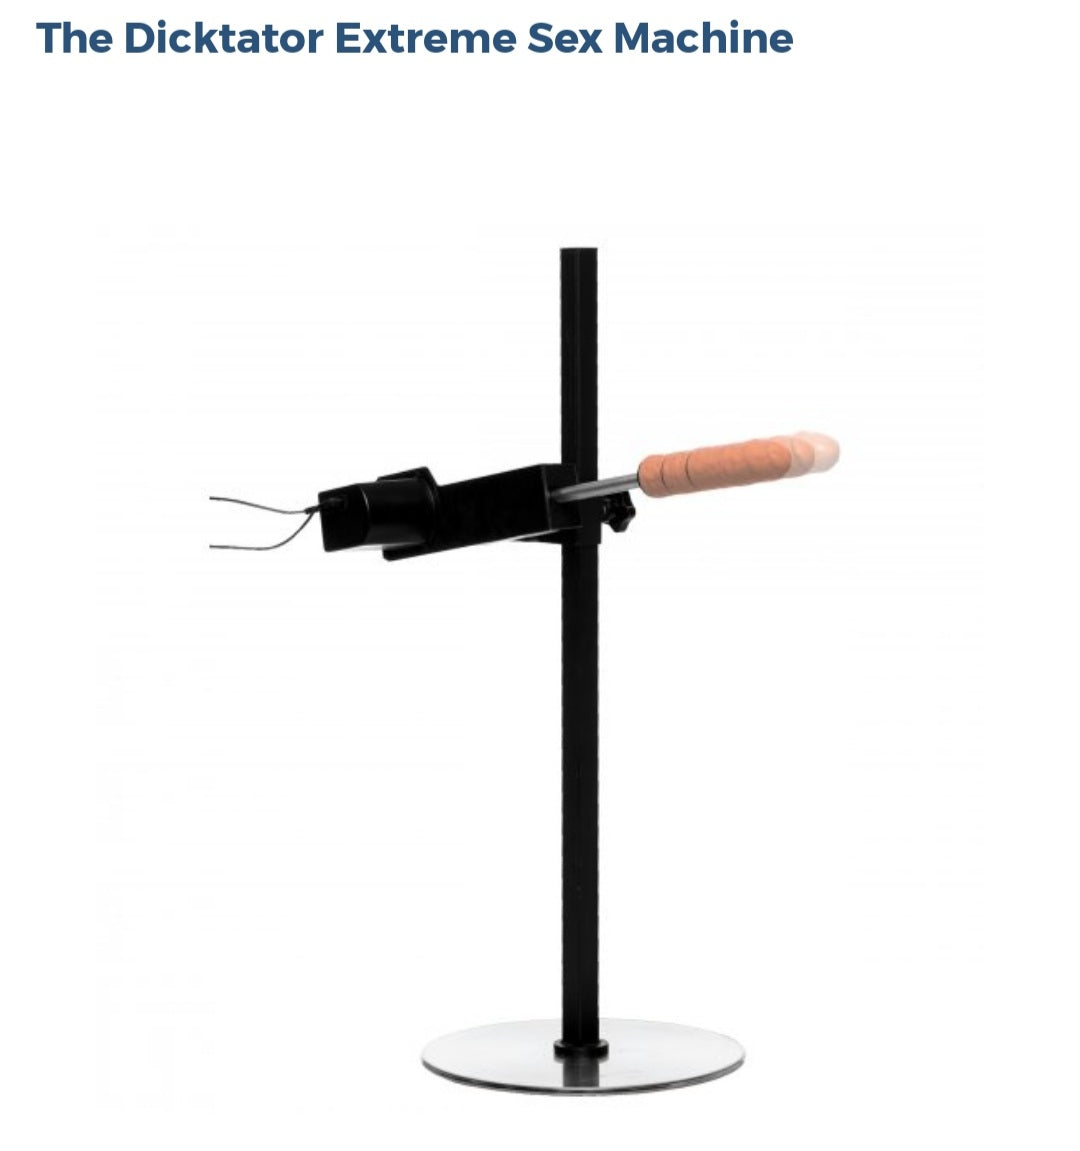 The Dicktator Extreme Sex Machine